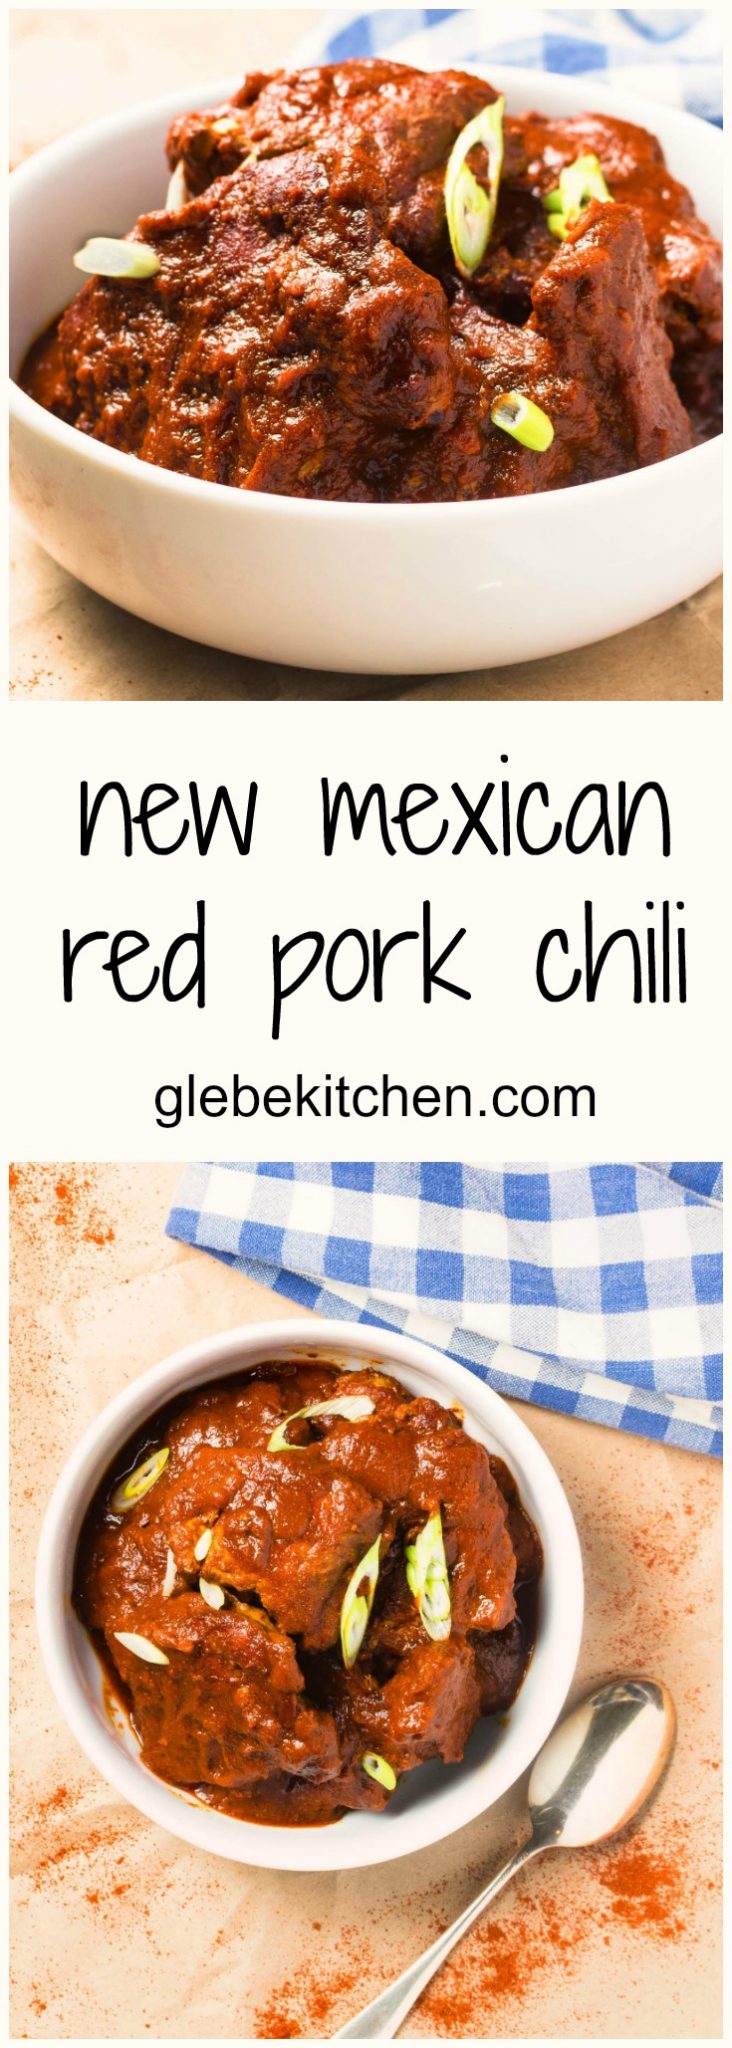 new mexican red pork chili carne adovada - glebe kitchen